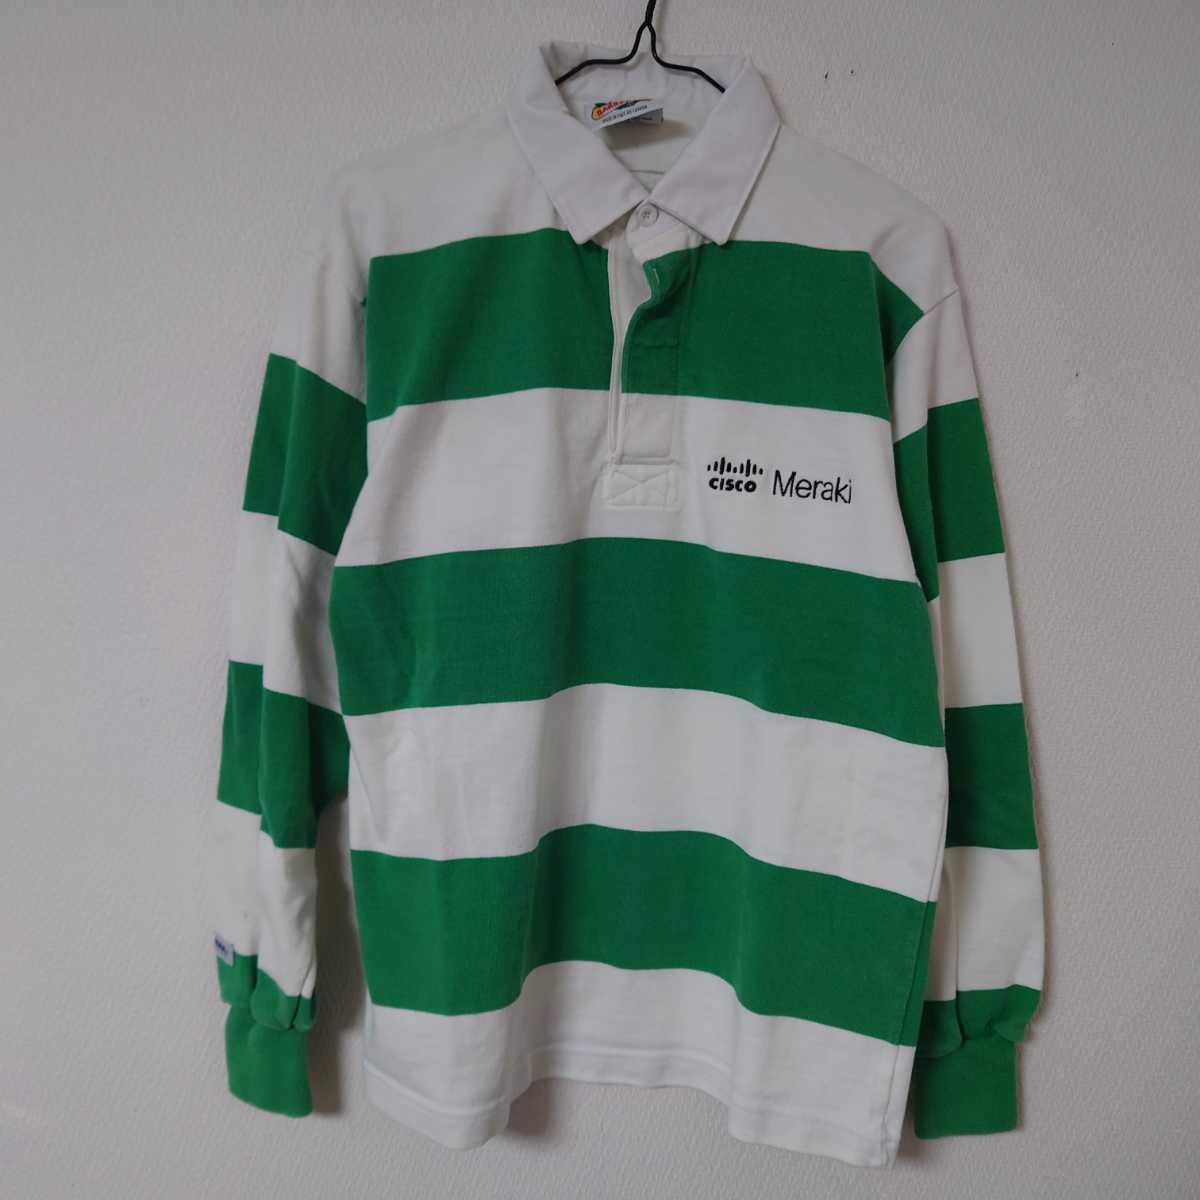 BARBARIAN バーバリアン ラガーシャツ ユニフォーム ビックボーダー カナダ製 白 緑 ホワイト グリーン Cisco Meraki